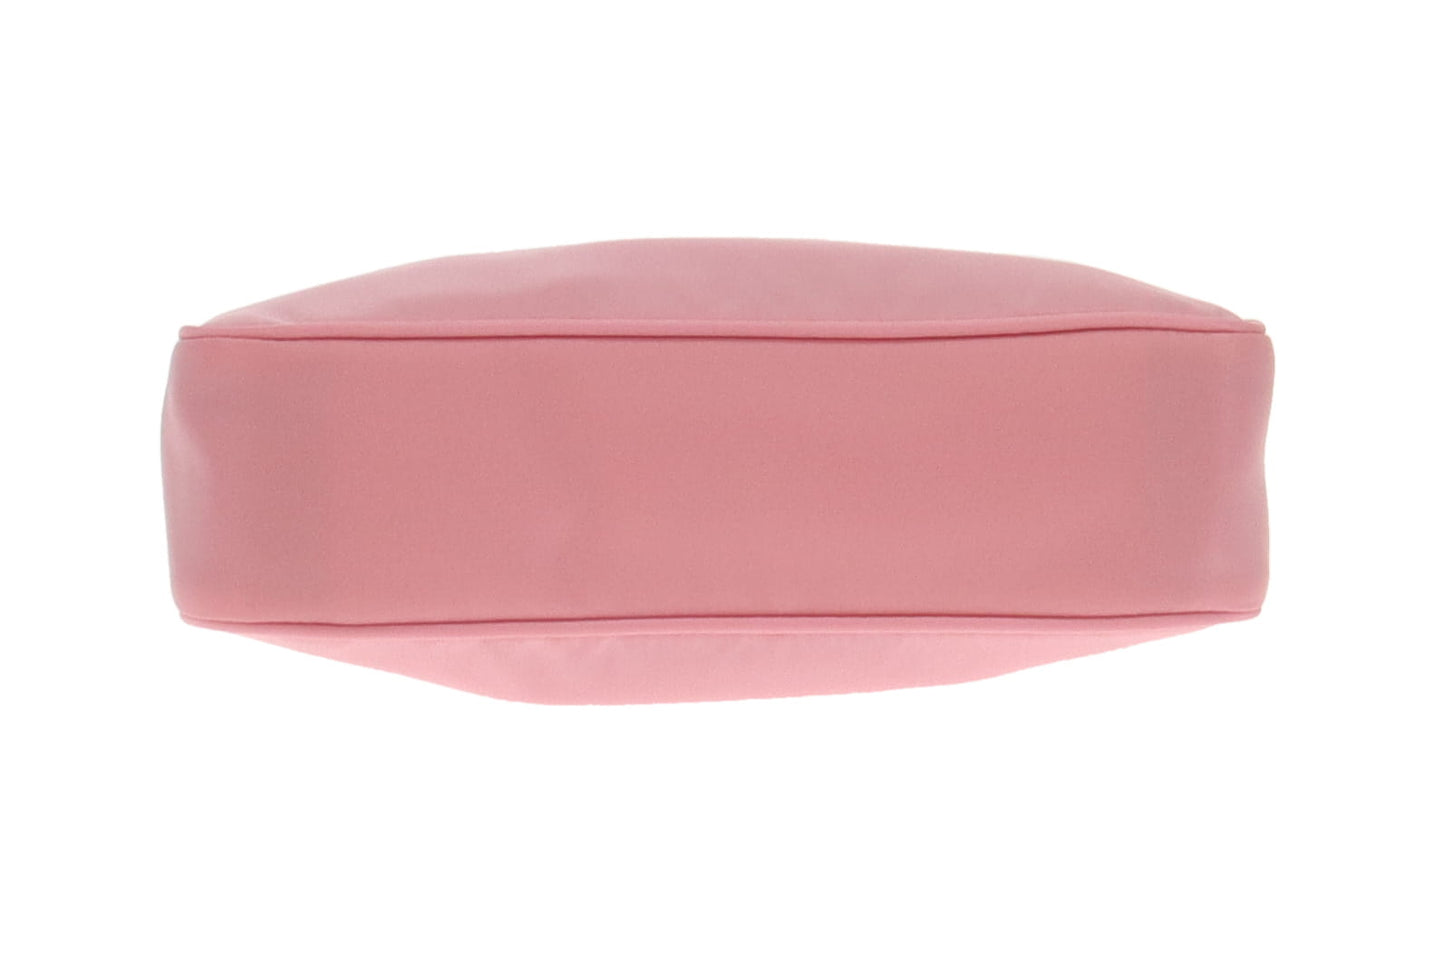 Prada Baby Pink Nylon Re-Edition 200 Mini Bag RRP €920